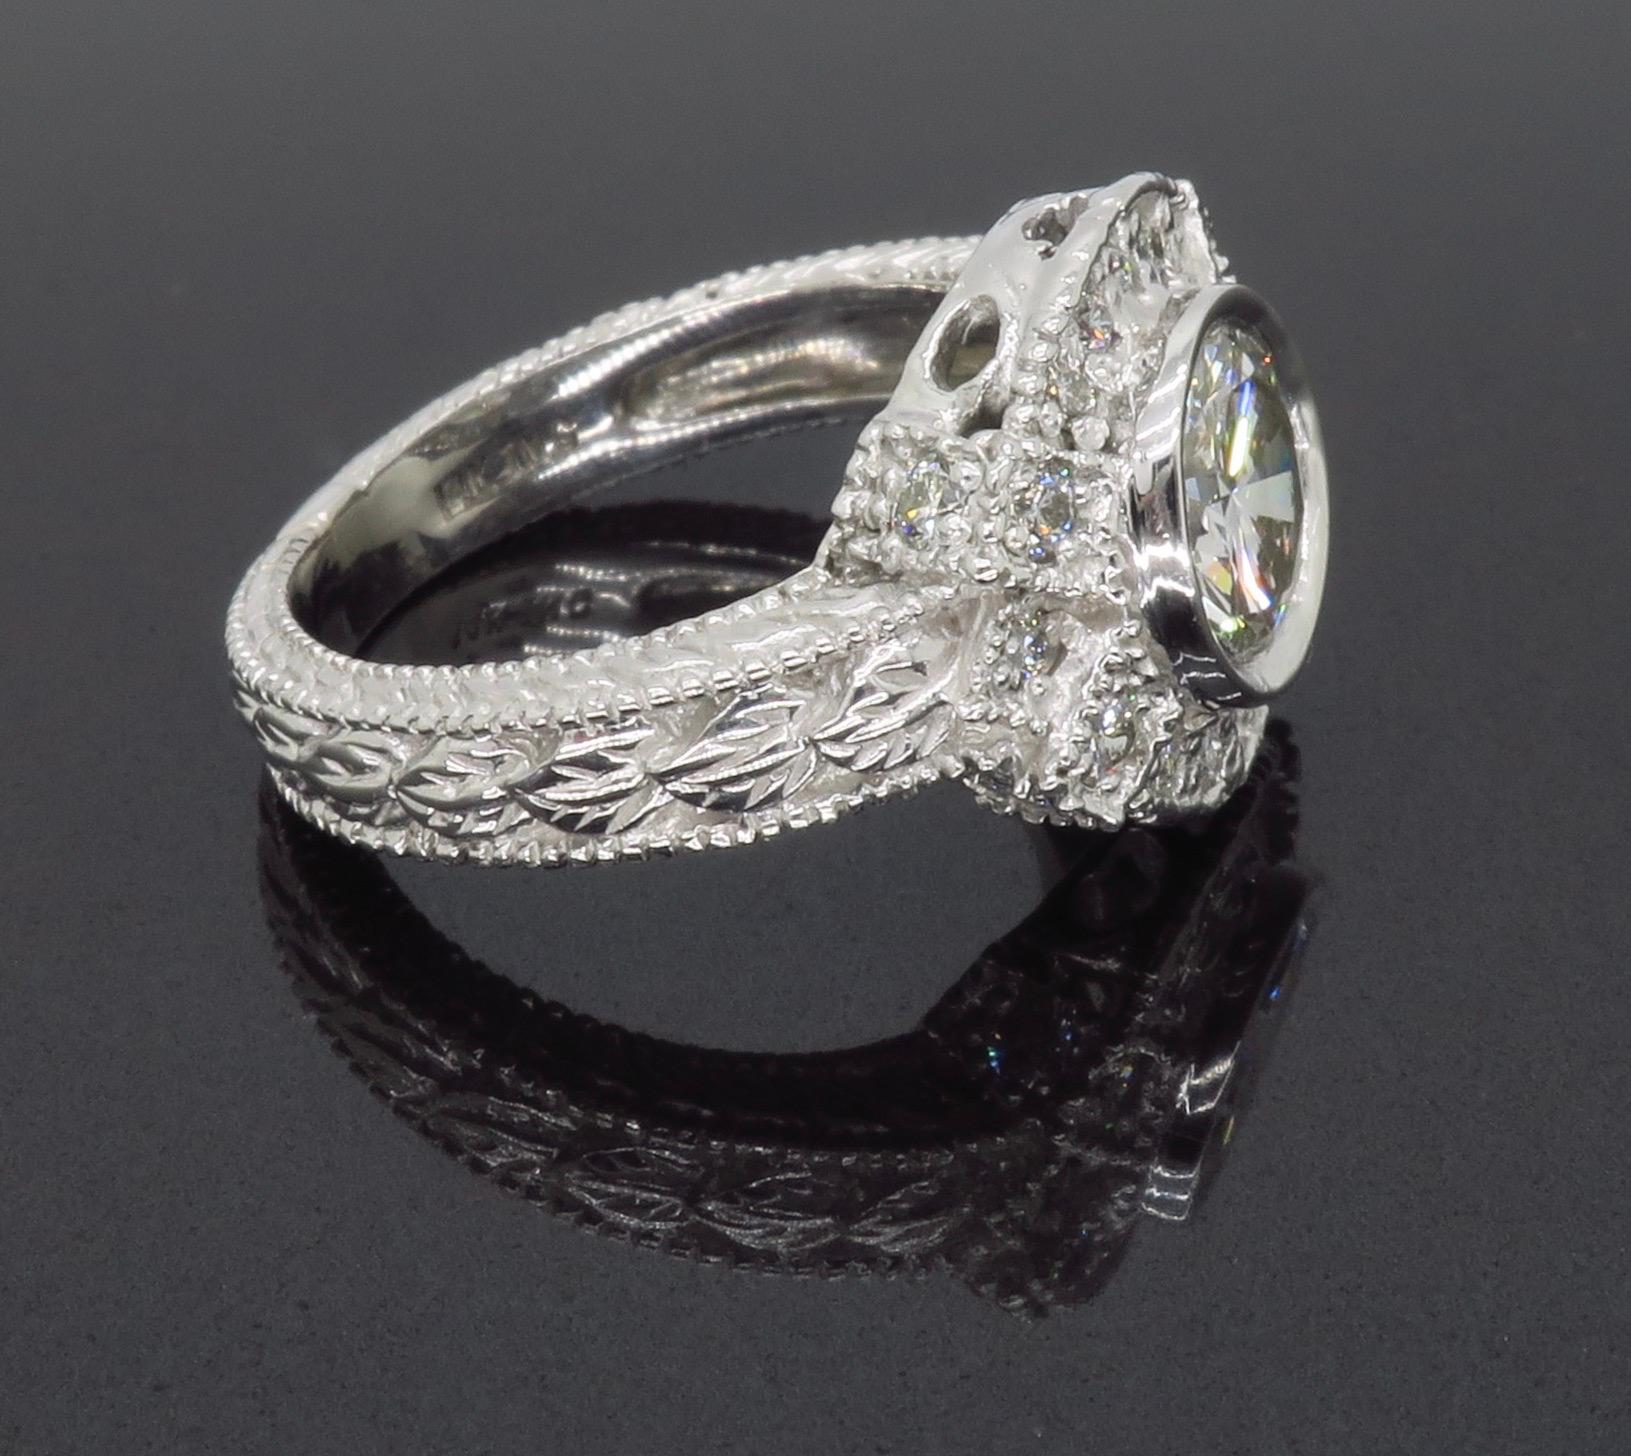 Vintage Inspired 1.27 Carat Diamond Ring Made in 14 Karat White Gold For Sale 1